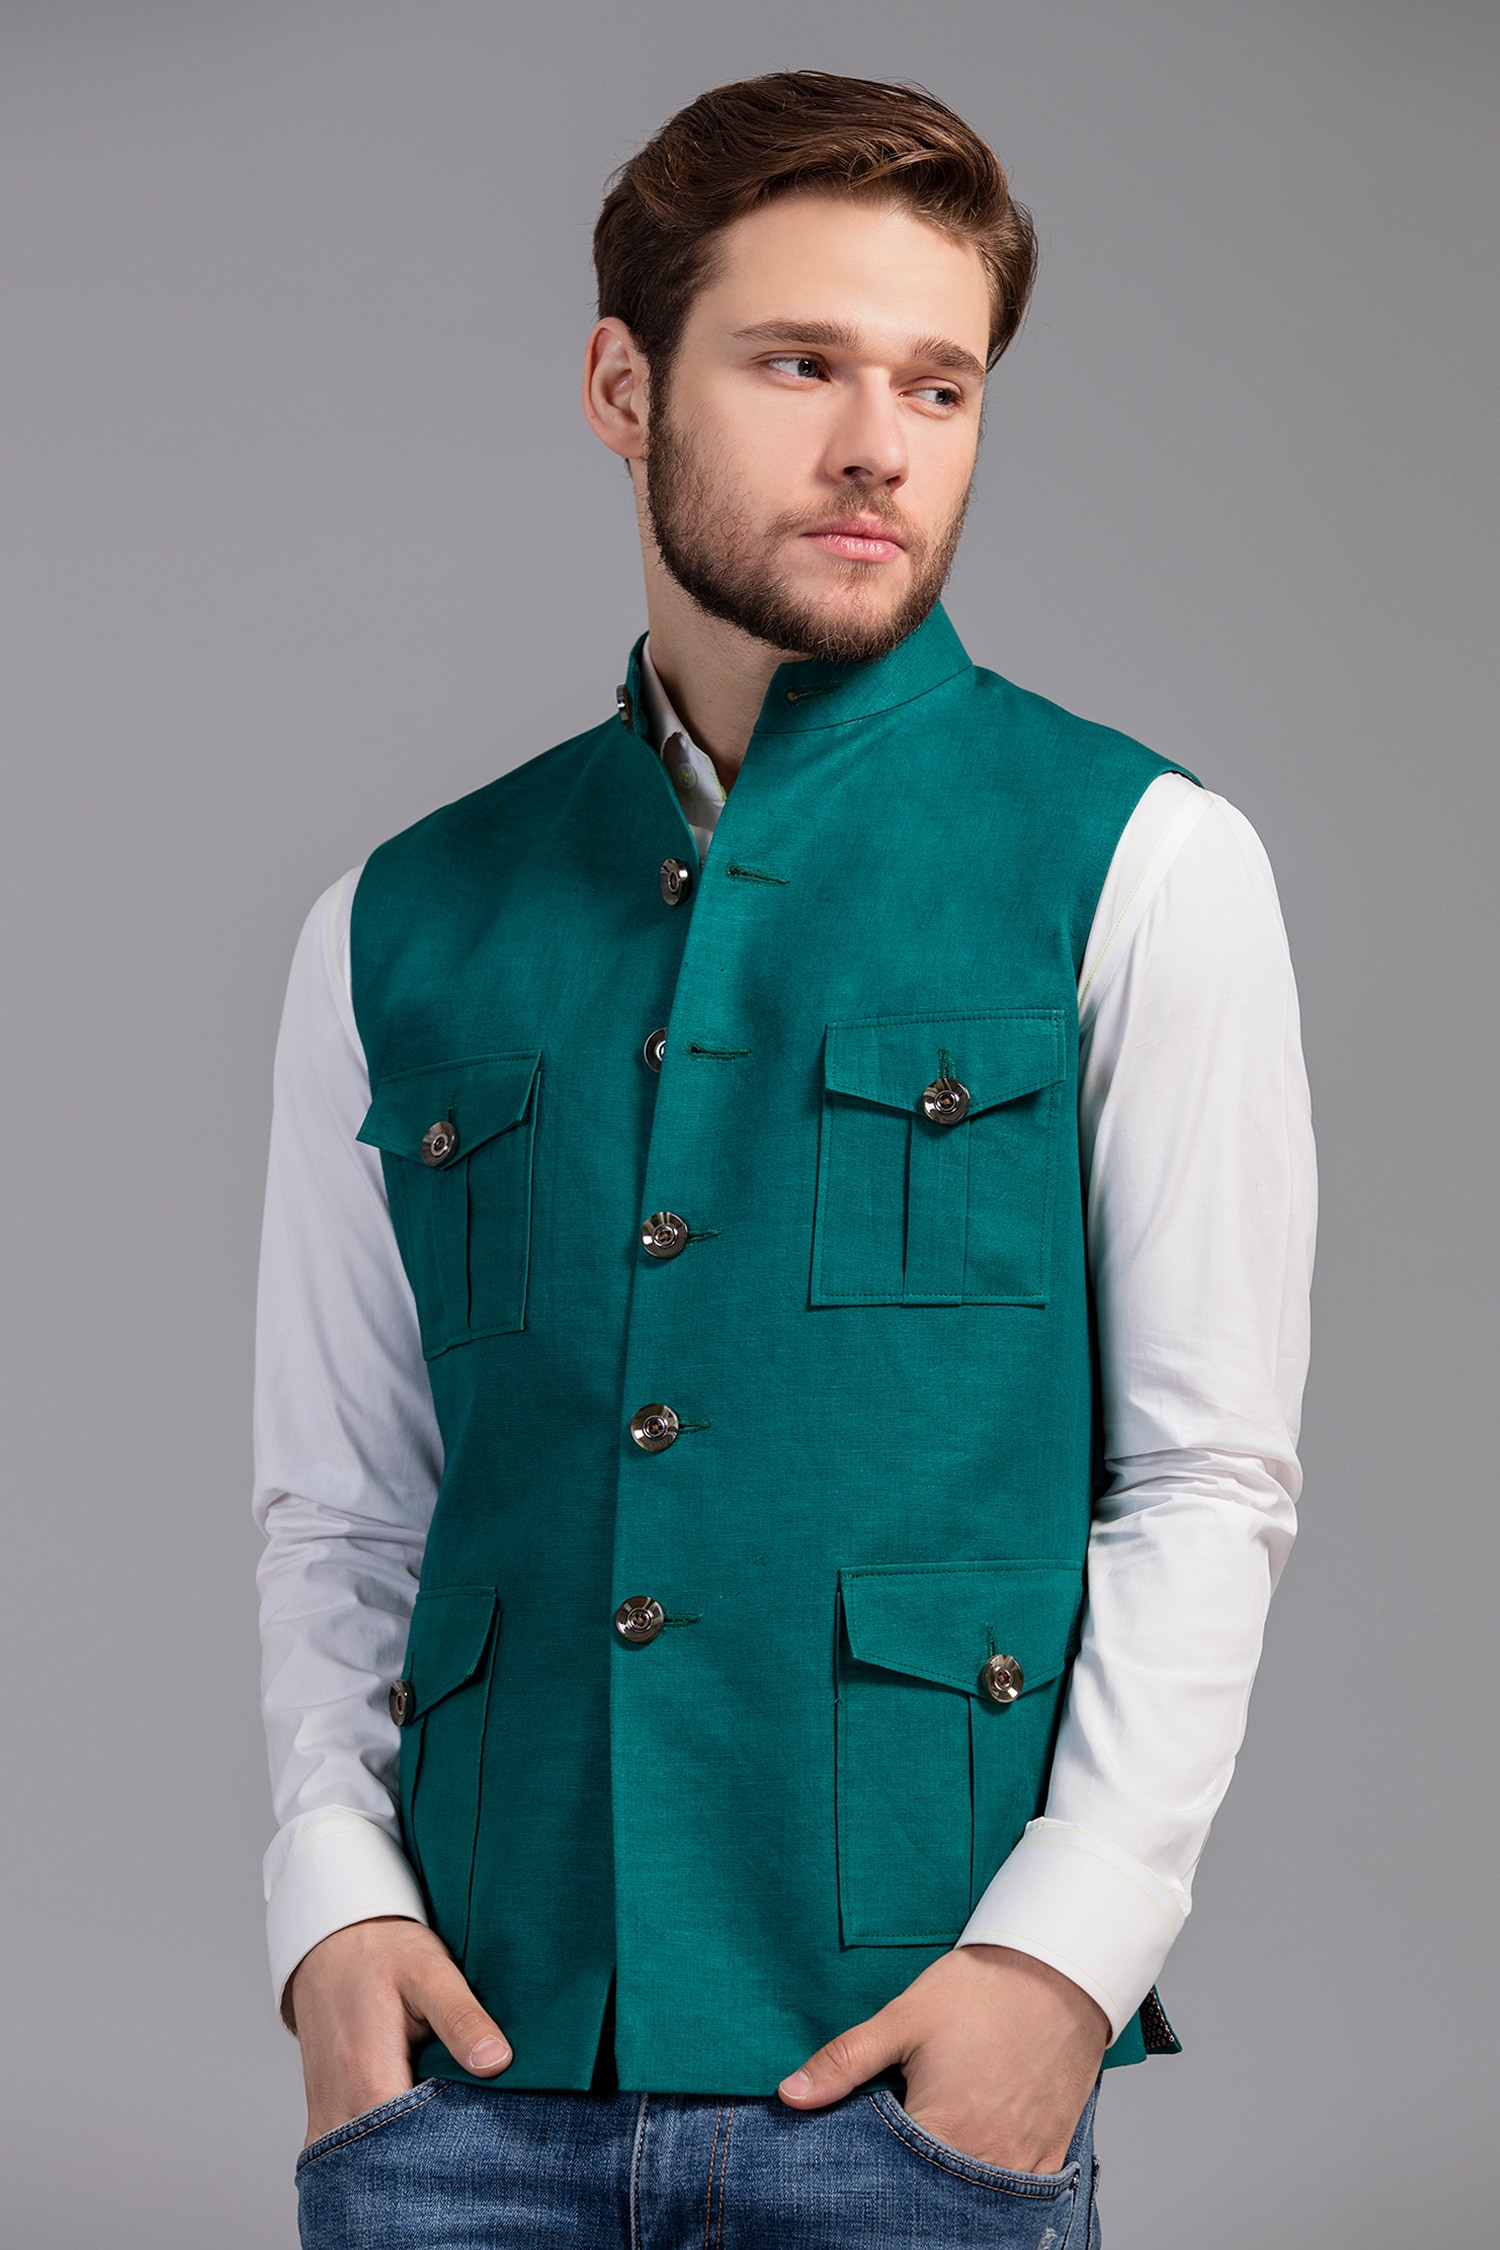 Burnham Dark Green Velvet Plain-Solid Premium Wedding Nehru Jacket For Men.